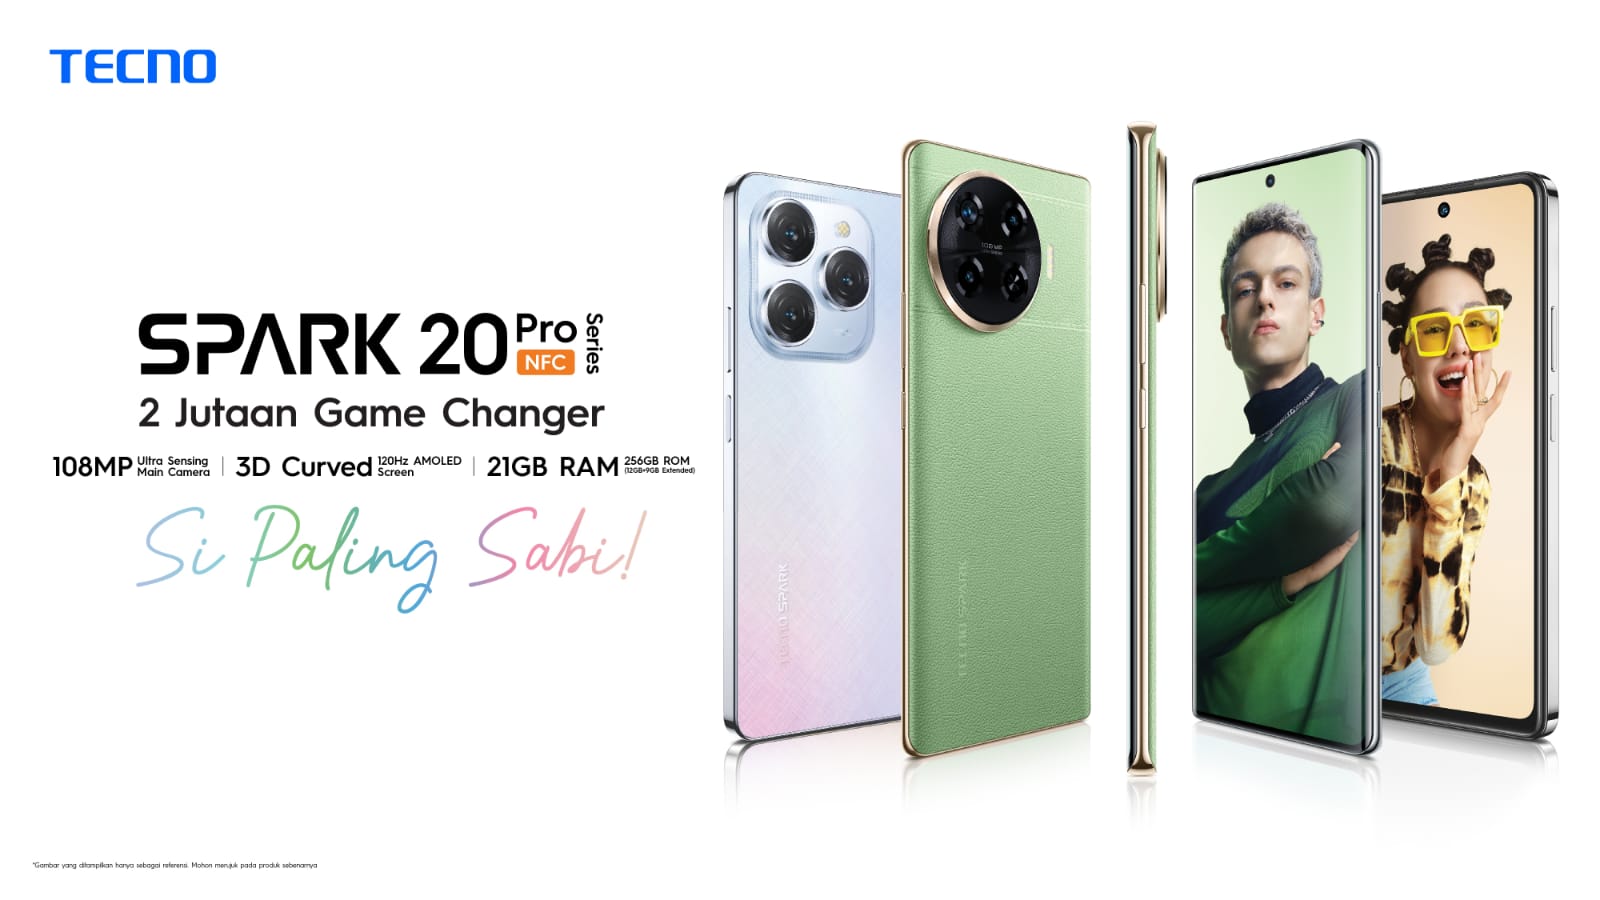 2 Jutaan Game Changer, TECNO SPARK 20 Pro Series Si Paling Sabi Ajak Anak Muda Berkreasi Meluncur 27 Februari 